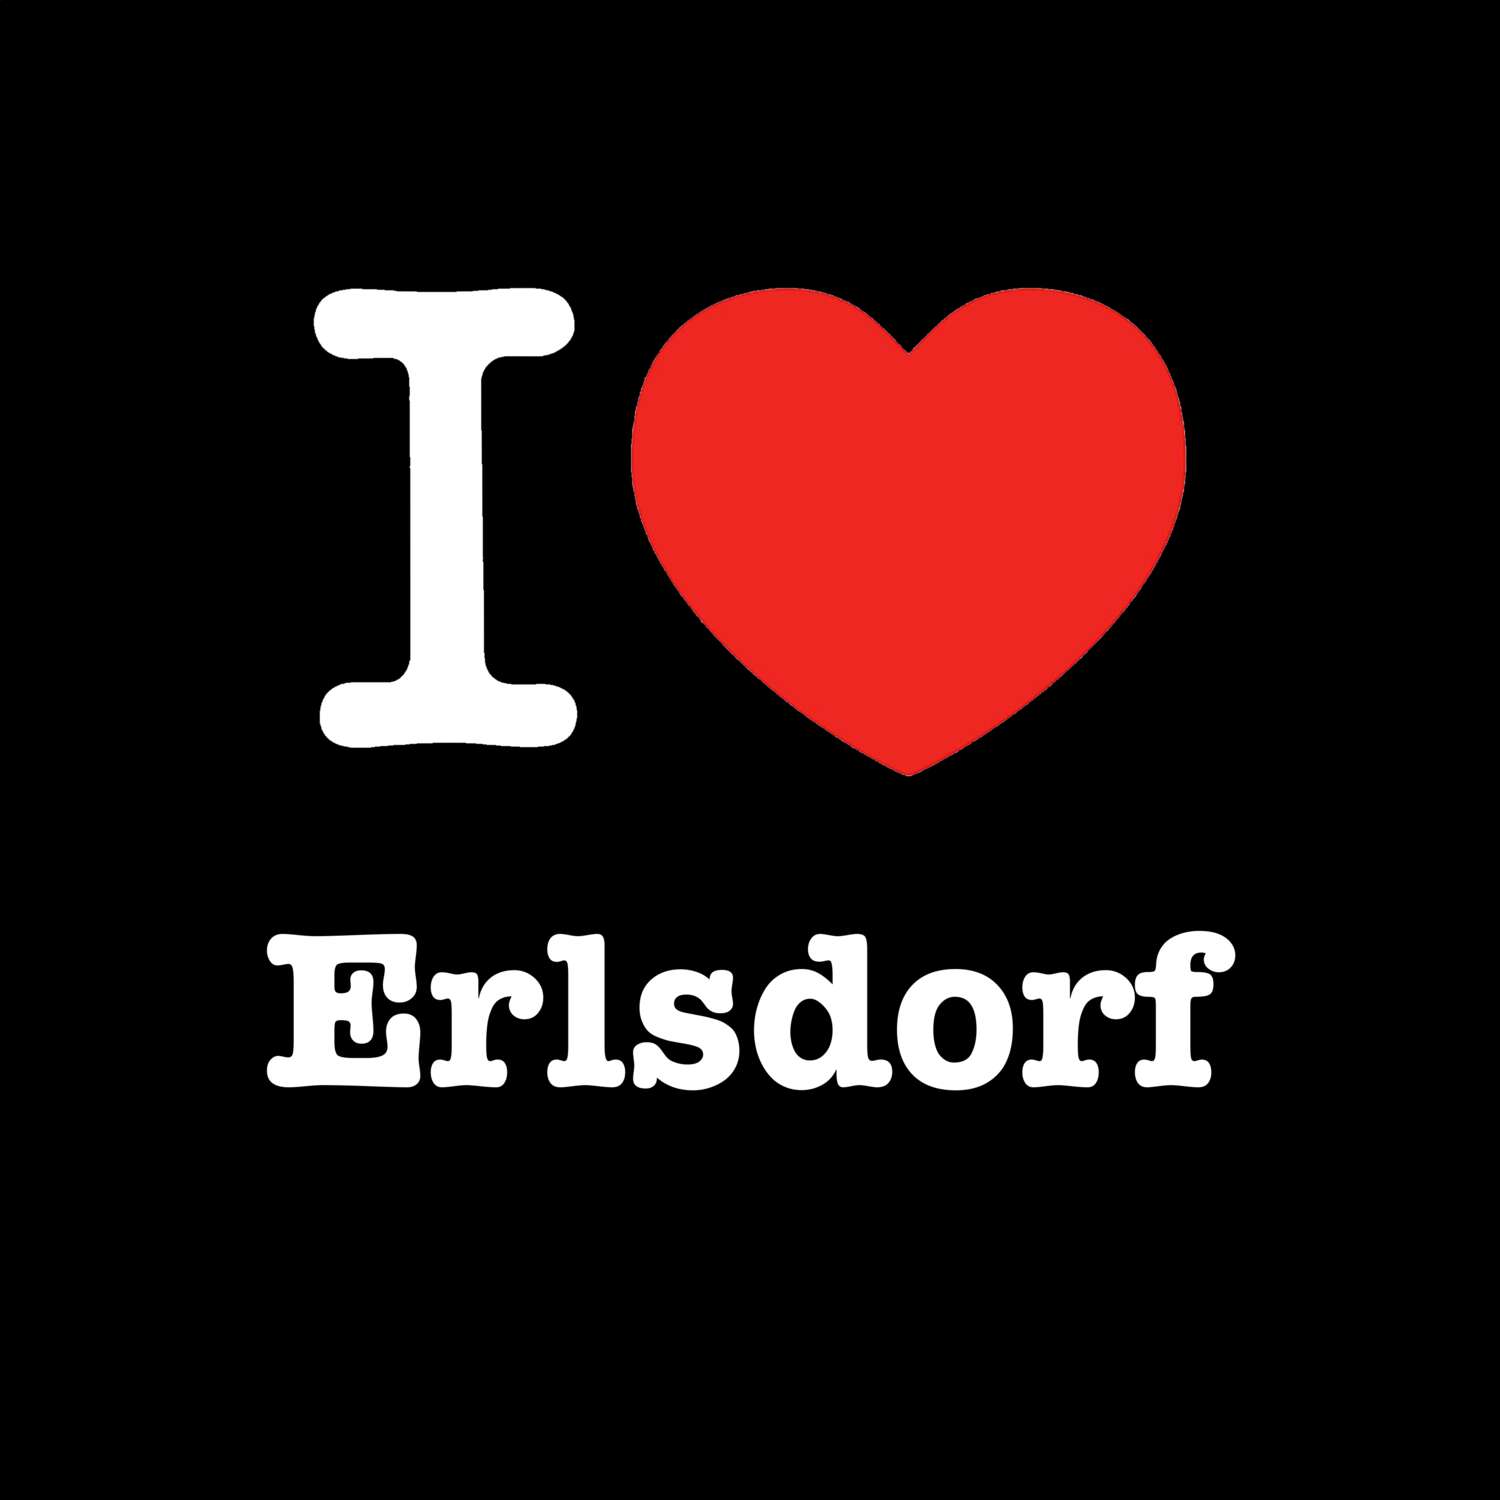 Erlsdorf T-Shirt »I love«